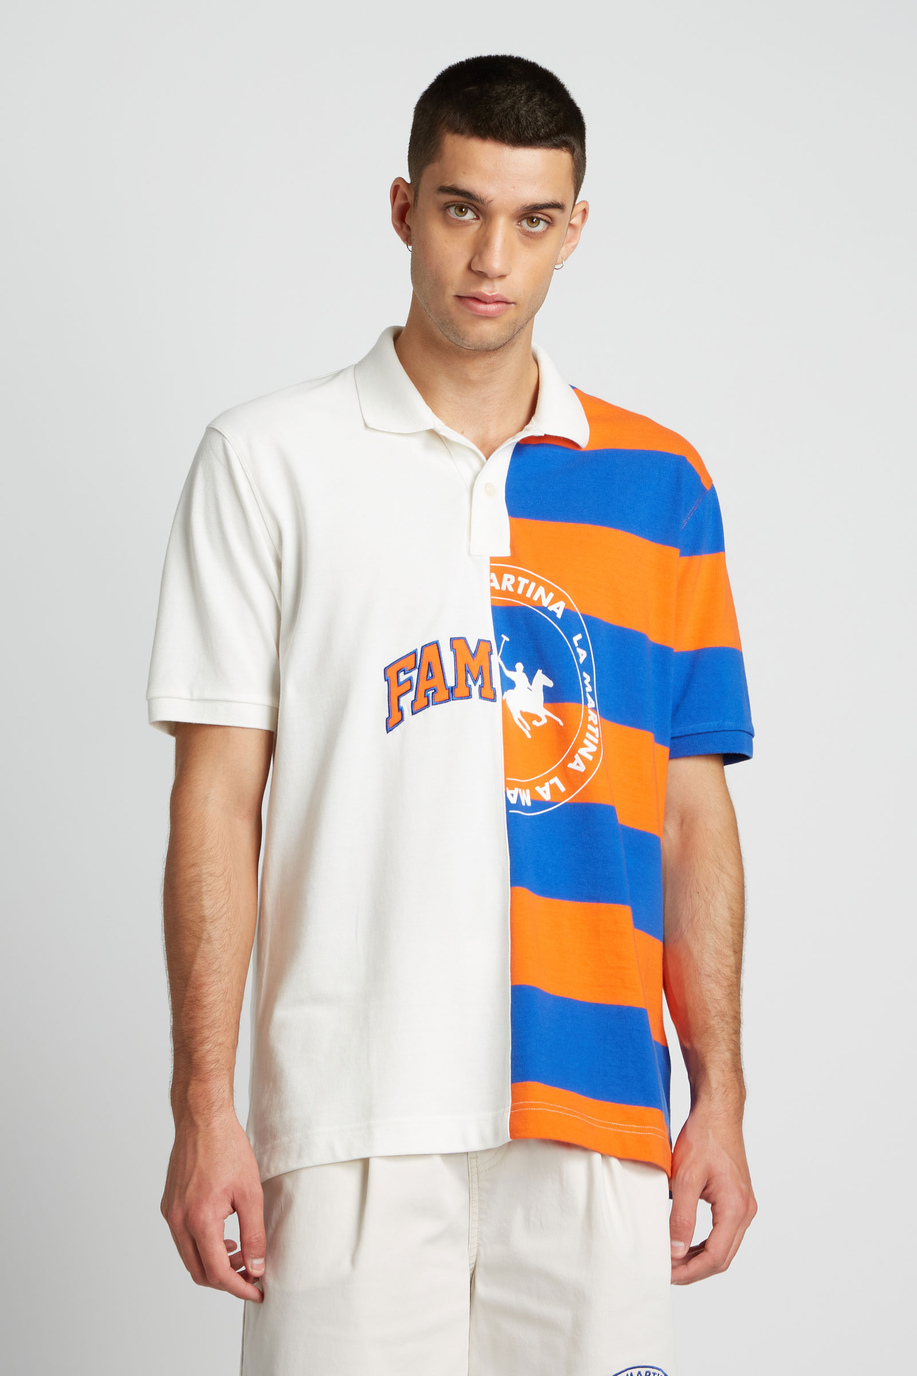 Herren-Poloshirt aus Piqué mit kurzem Arm, oversized Modell - Kleidung | La Martina - Official Online Shop